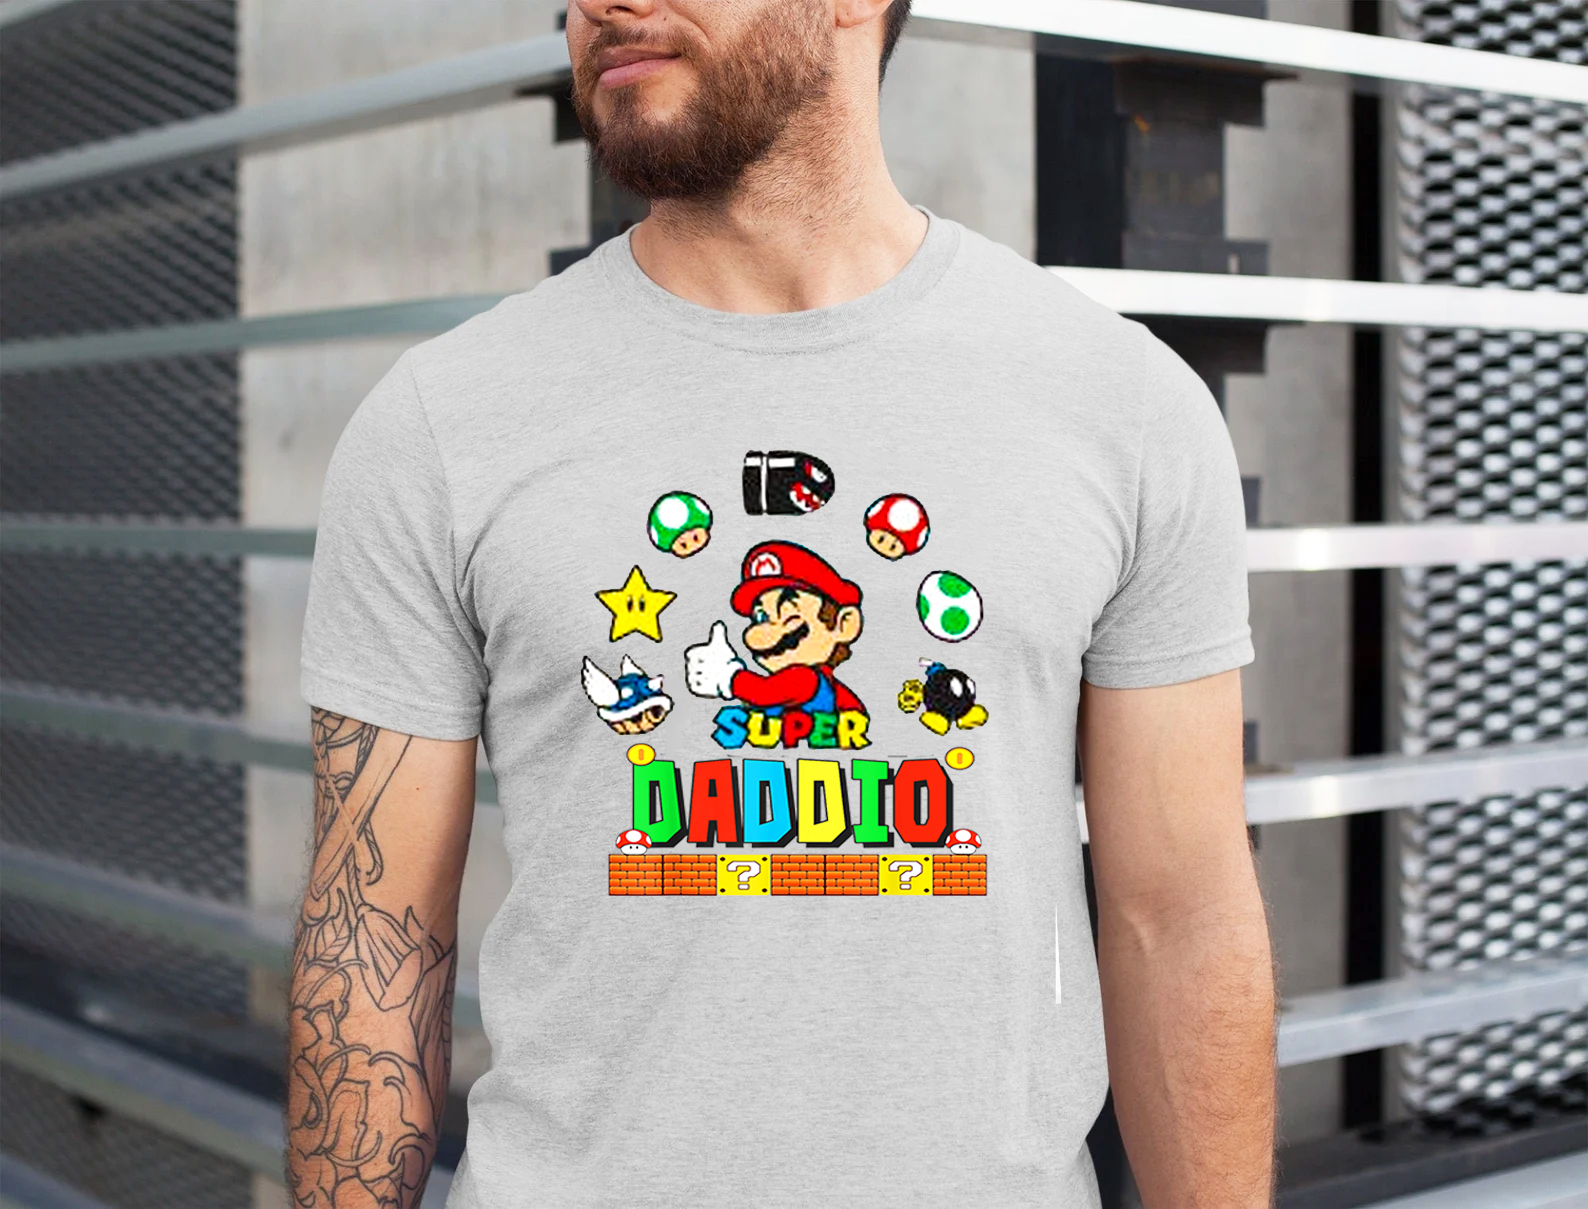 Super Daddio T-Shirt, Mario Dad Shirt, Fathers Day Shirt, Gamer Daddy Shirt, Funny Fathers Day Gift, Mario Funny Shirt, Funny Daddio Tee, Funny Shirt, Best dad Mario